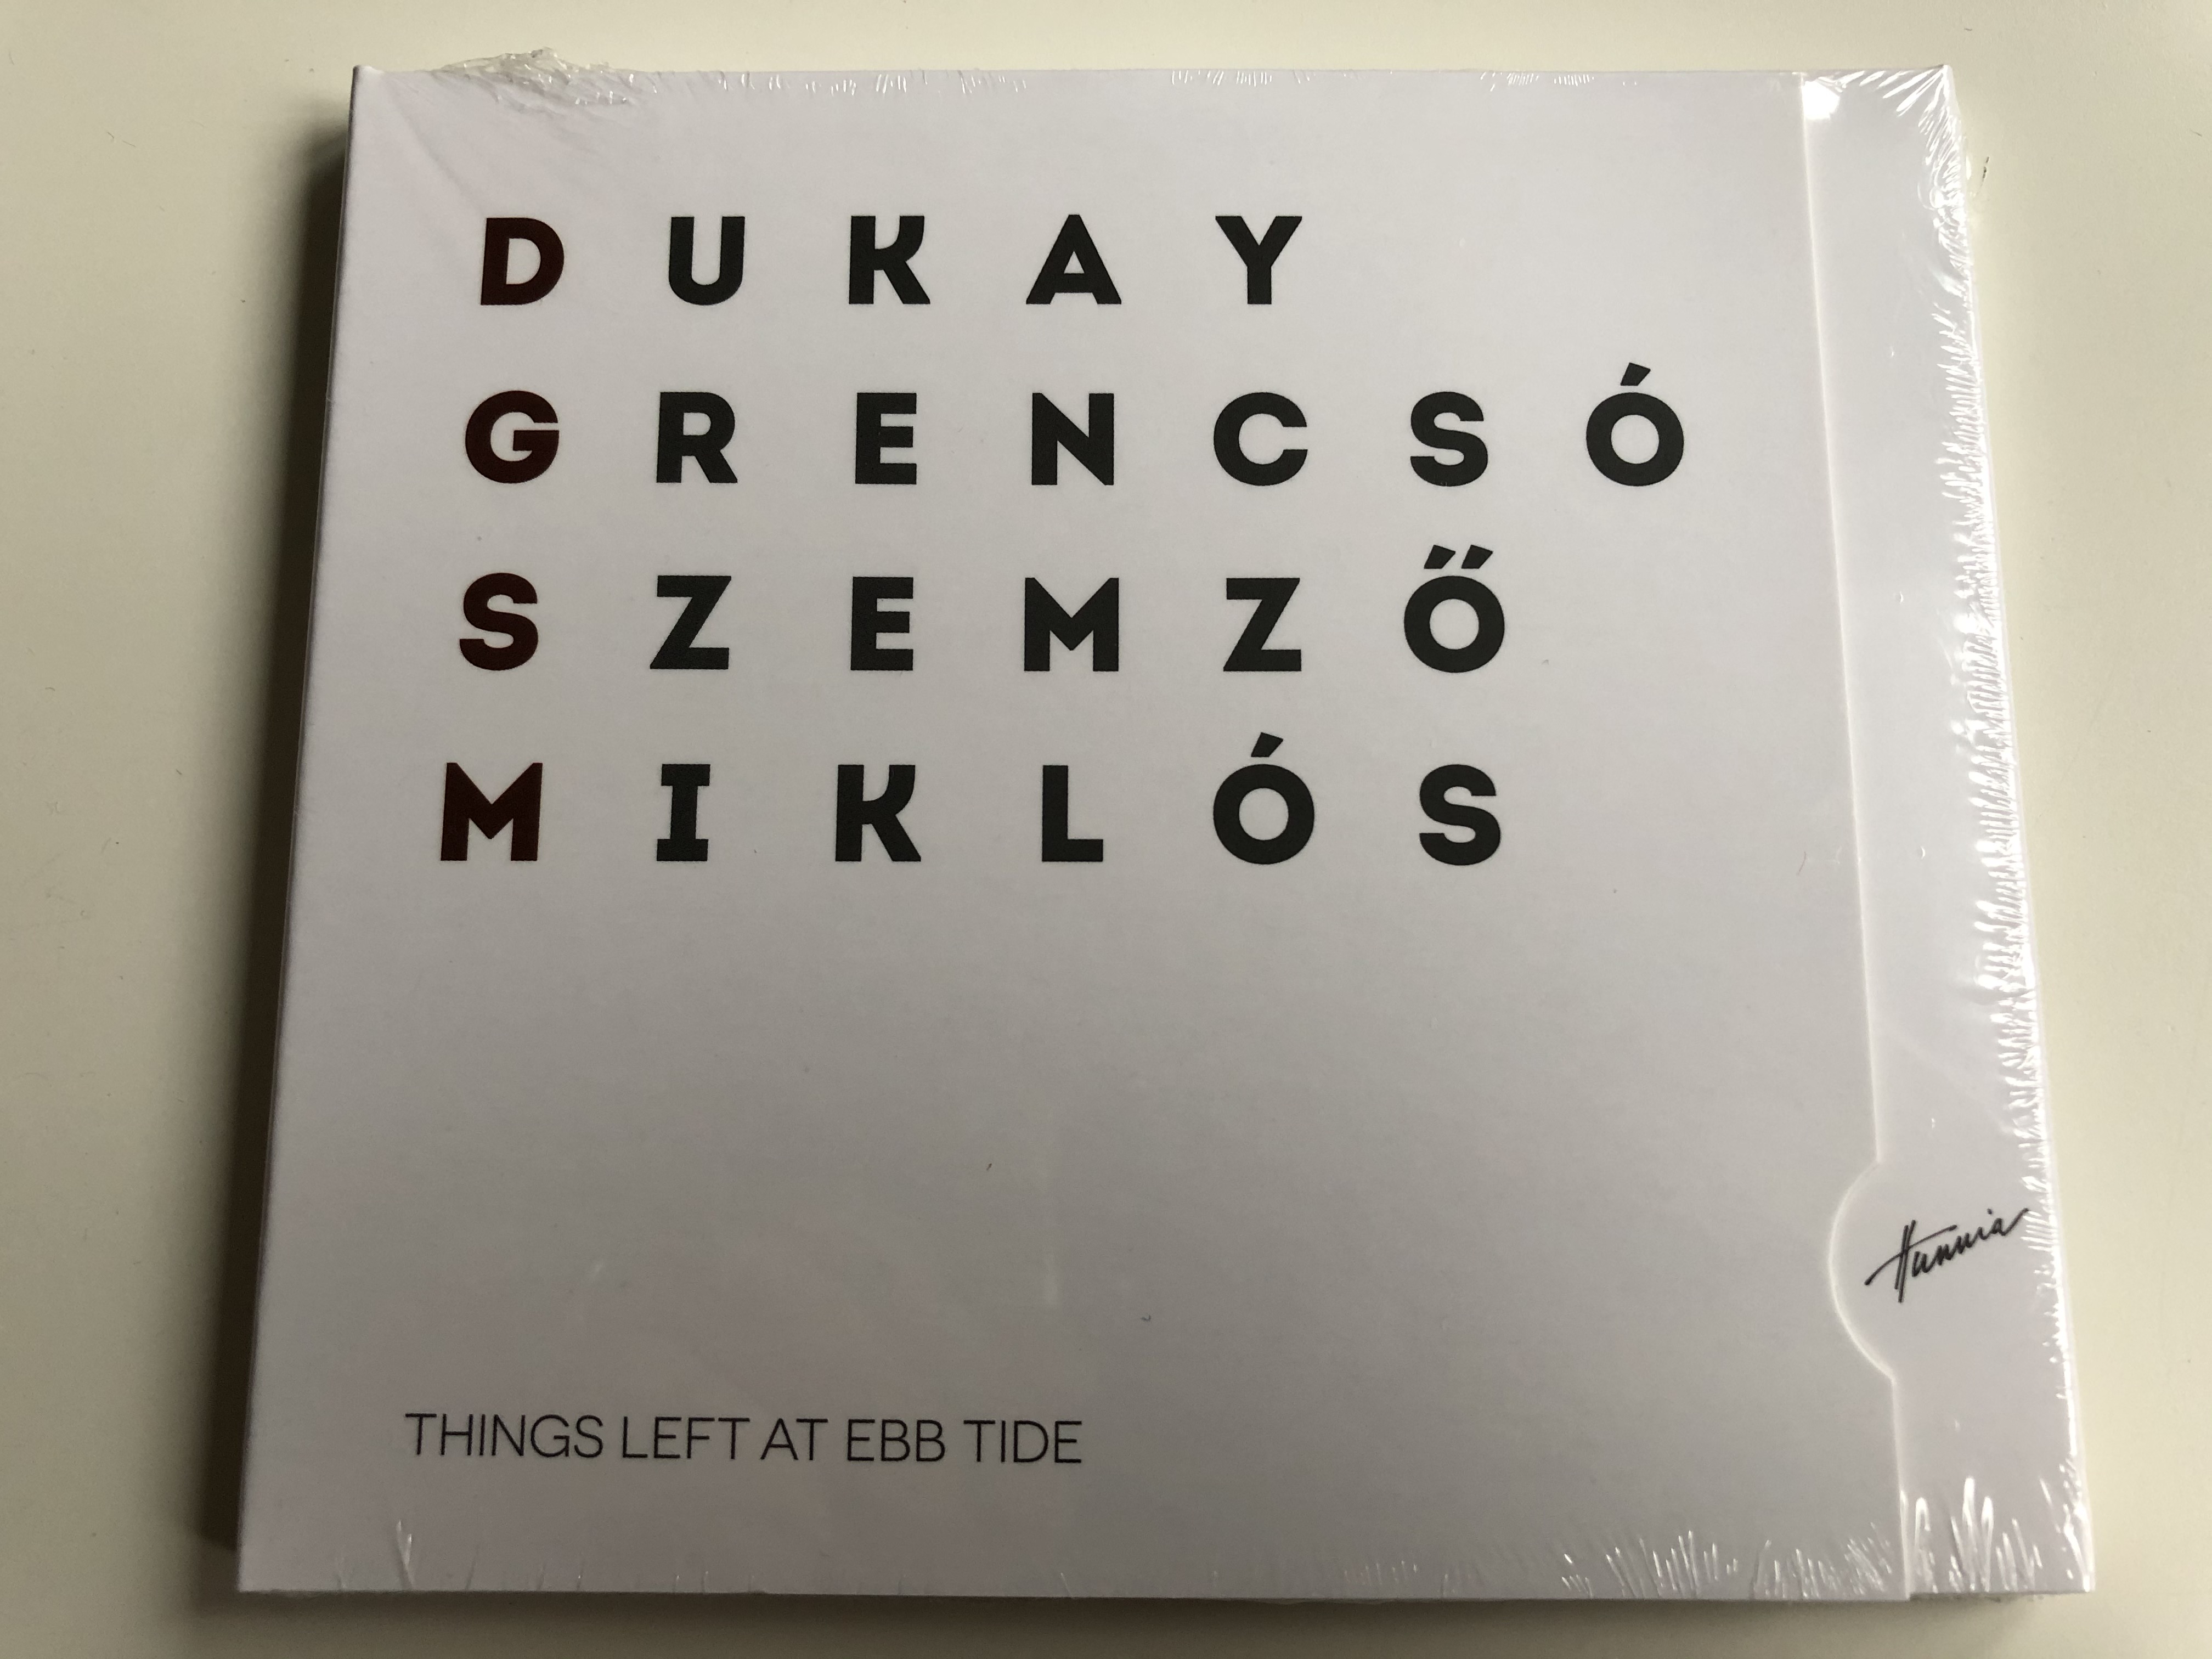 dukay-grencs-szemz-mikl-s-things-left-at-ebb-tide-hunnia-records-film-production-audio-cd-2016-hrcd-1607-1-.jpg